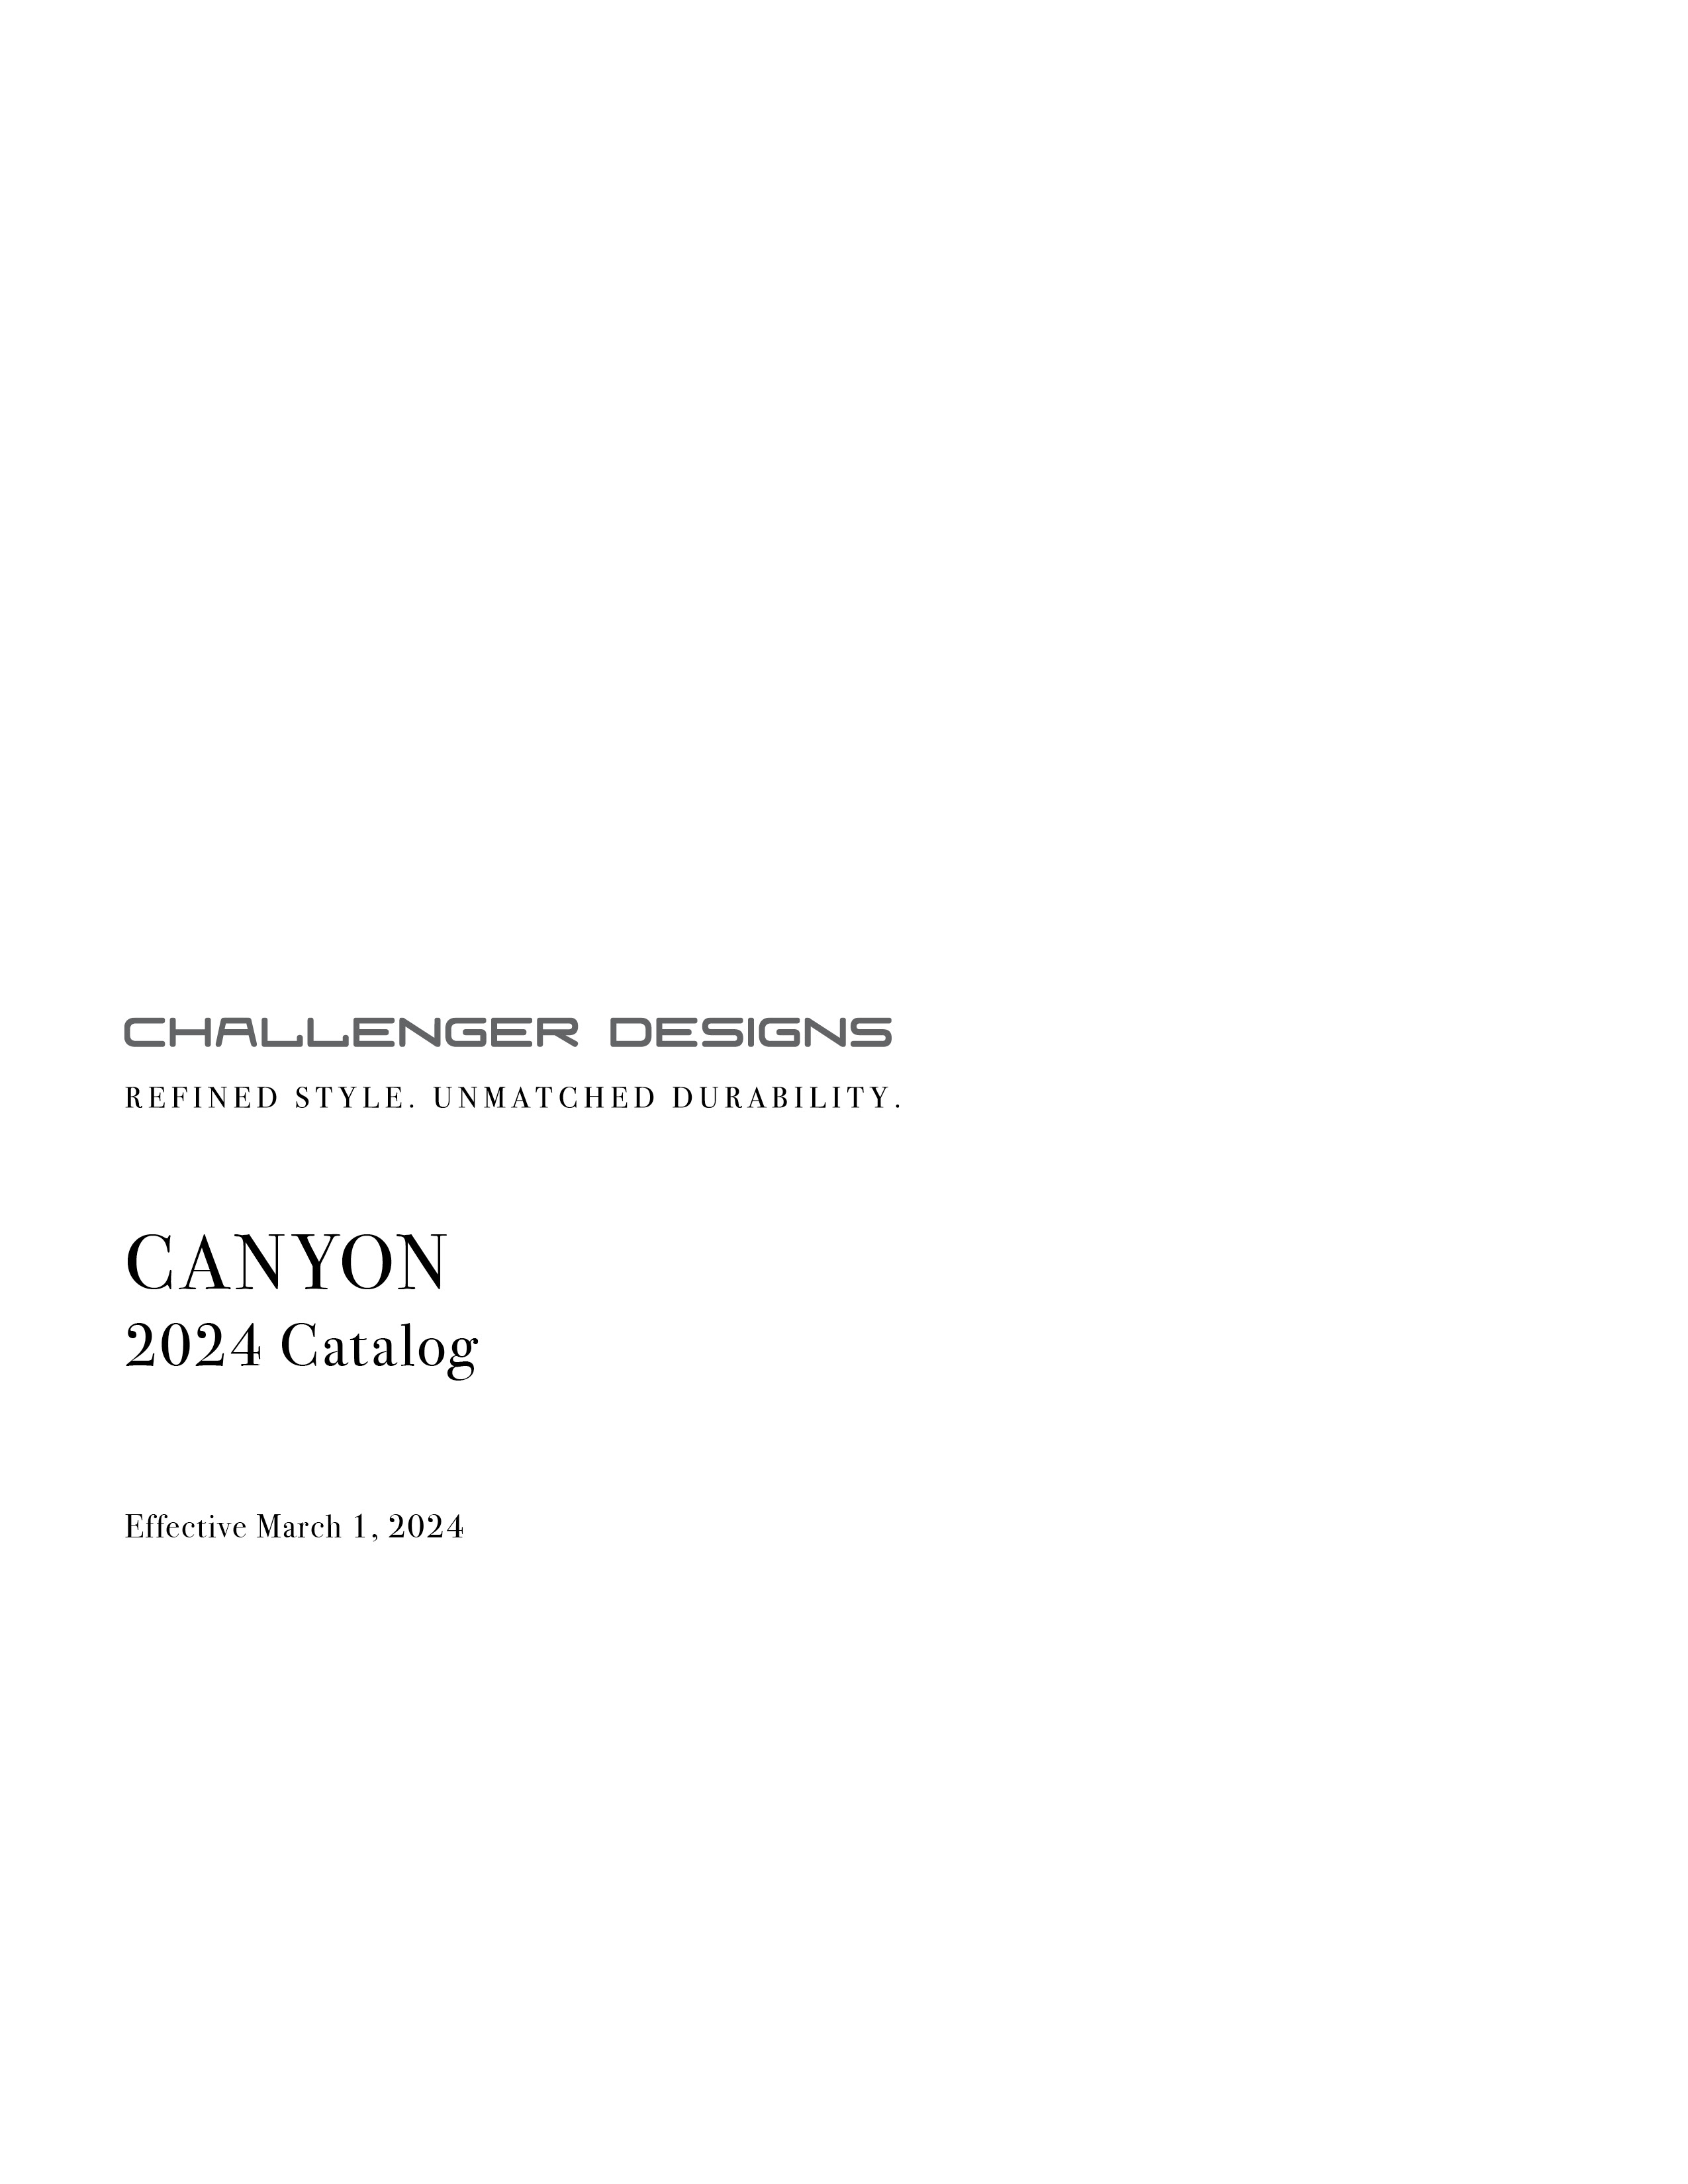 CHALLENGER DESIGNS Canyon Series Brochure